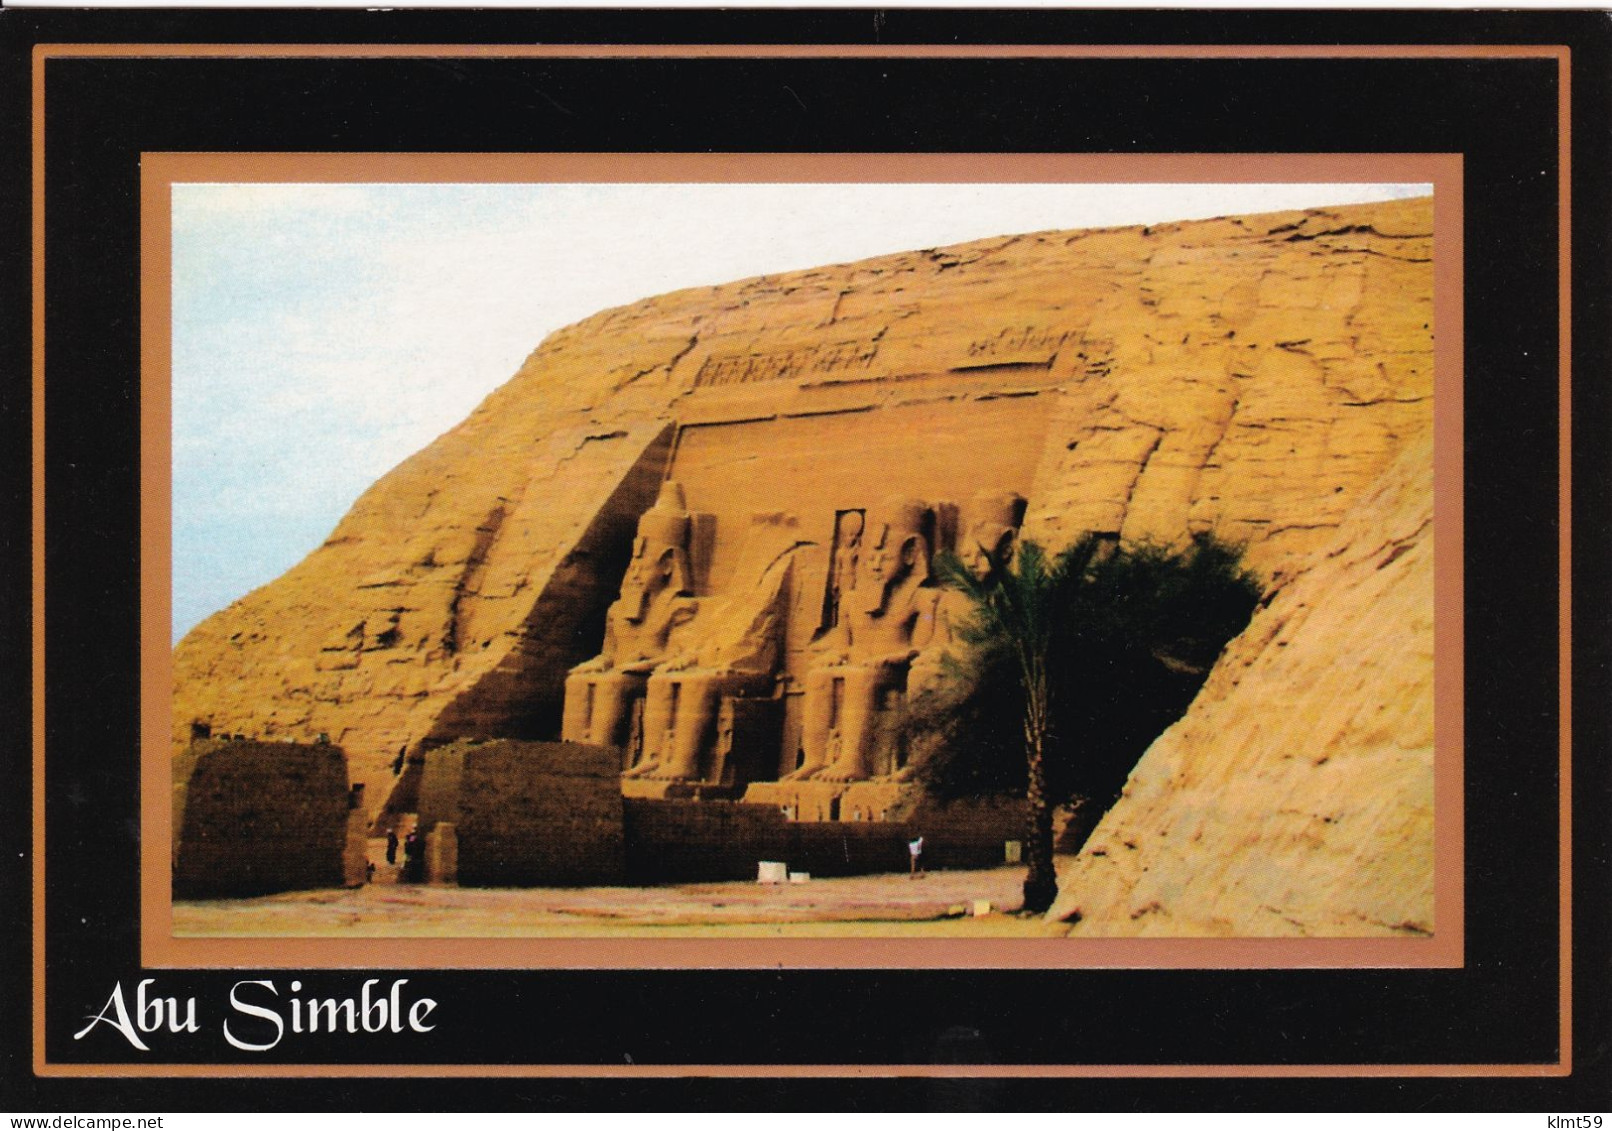 Abu Simble - Abu Simbel